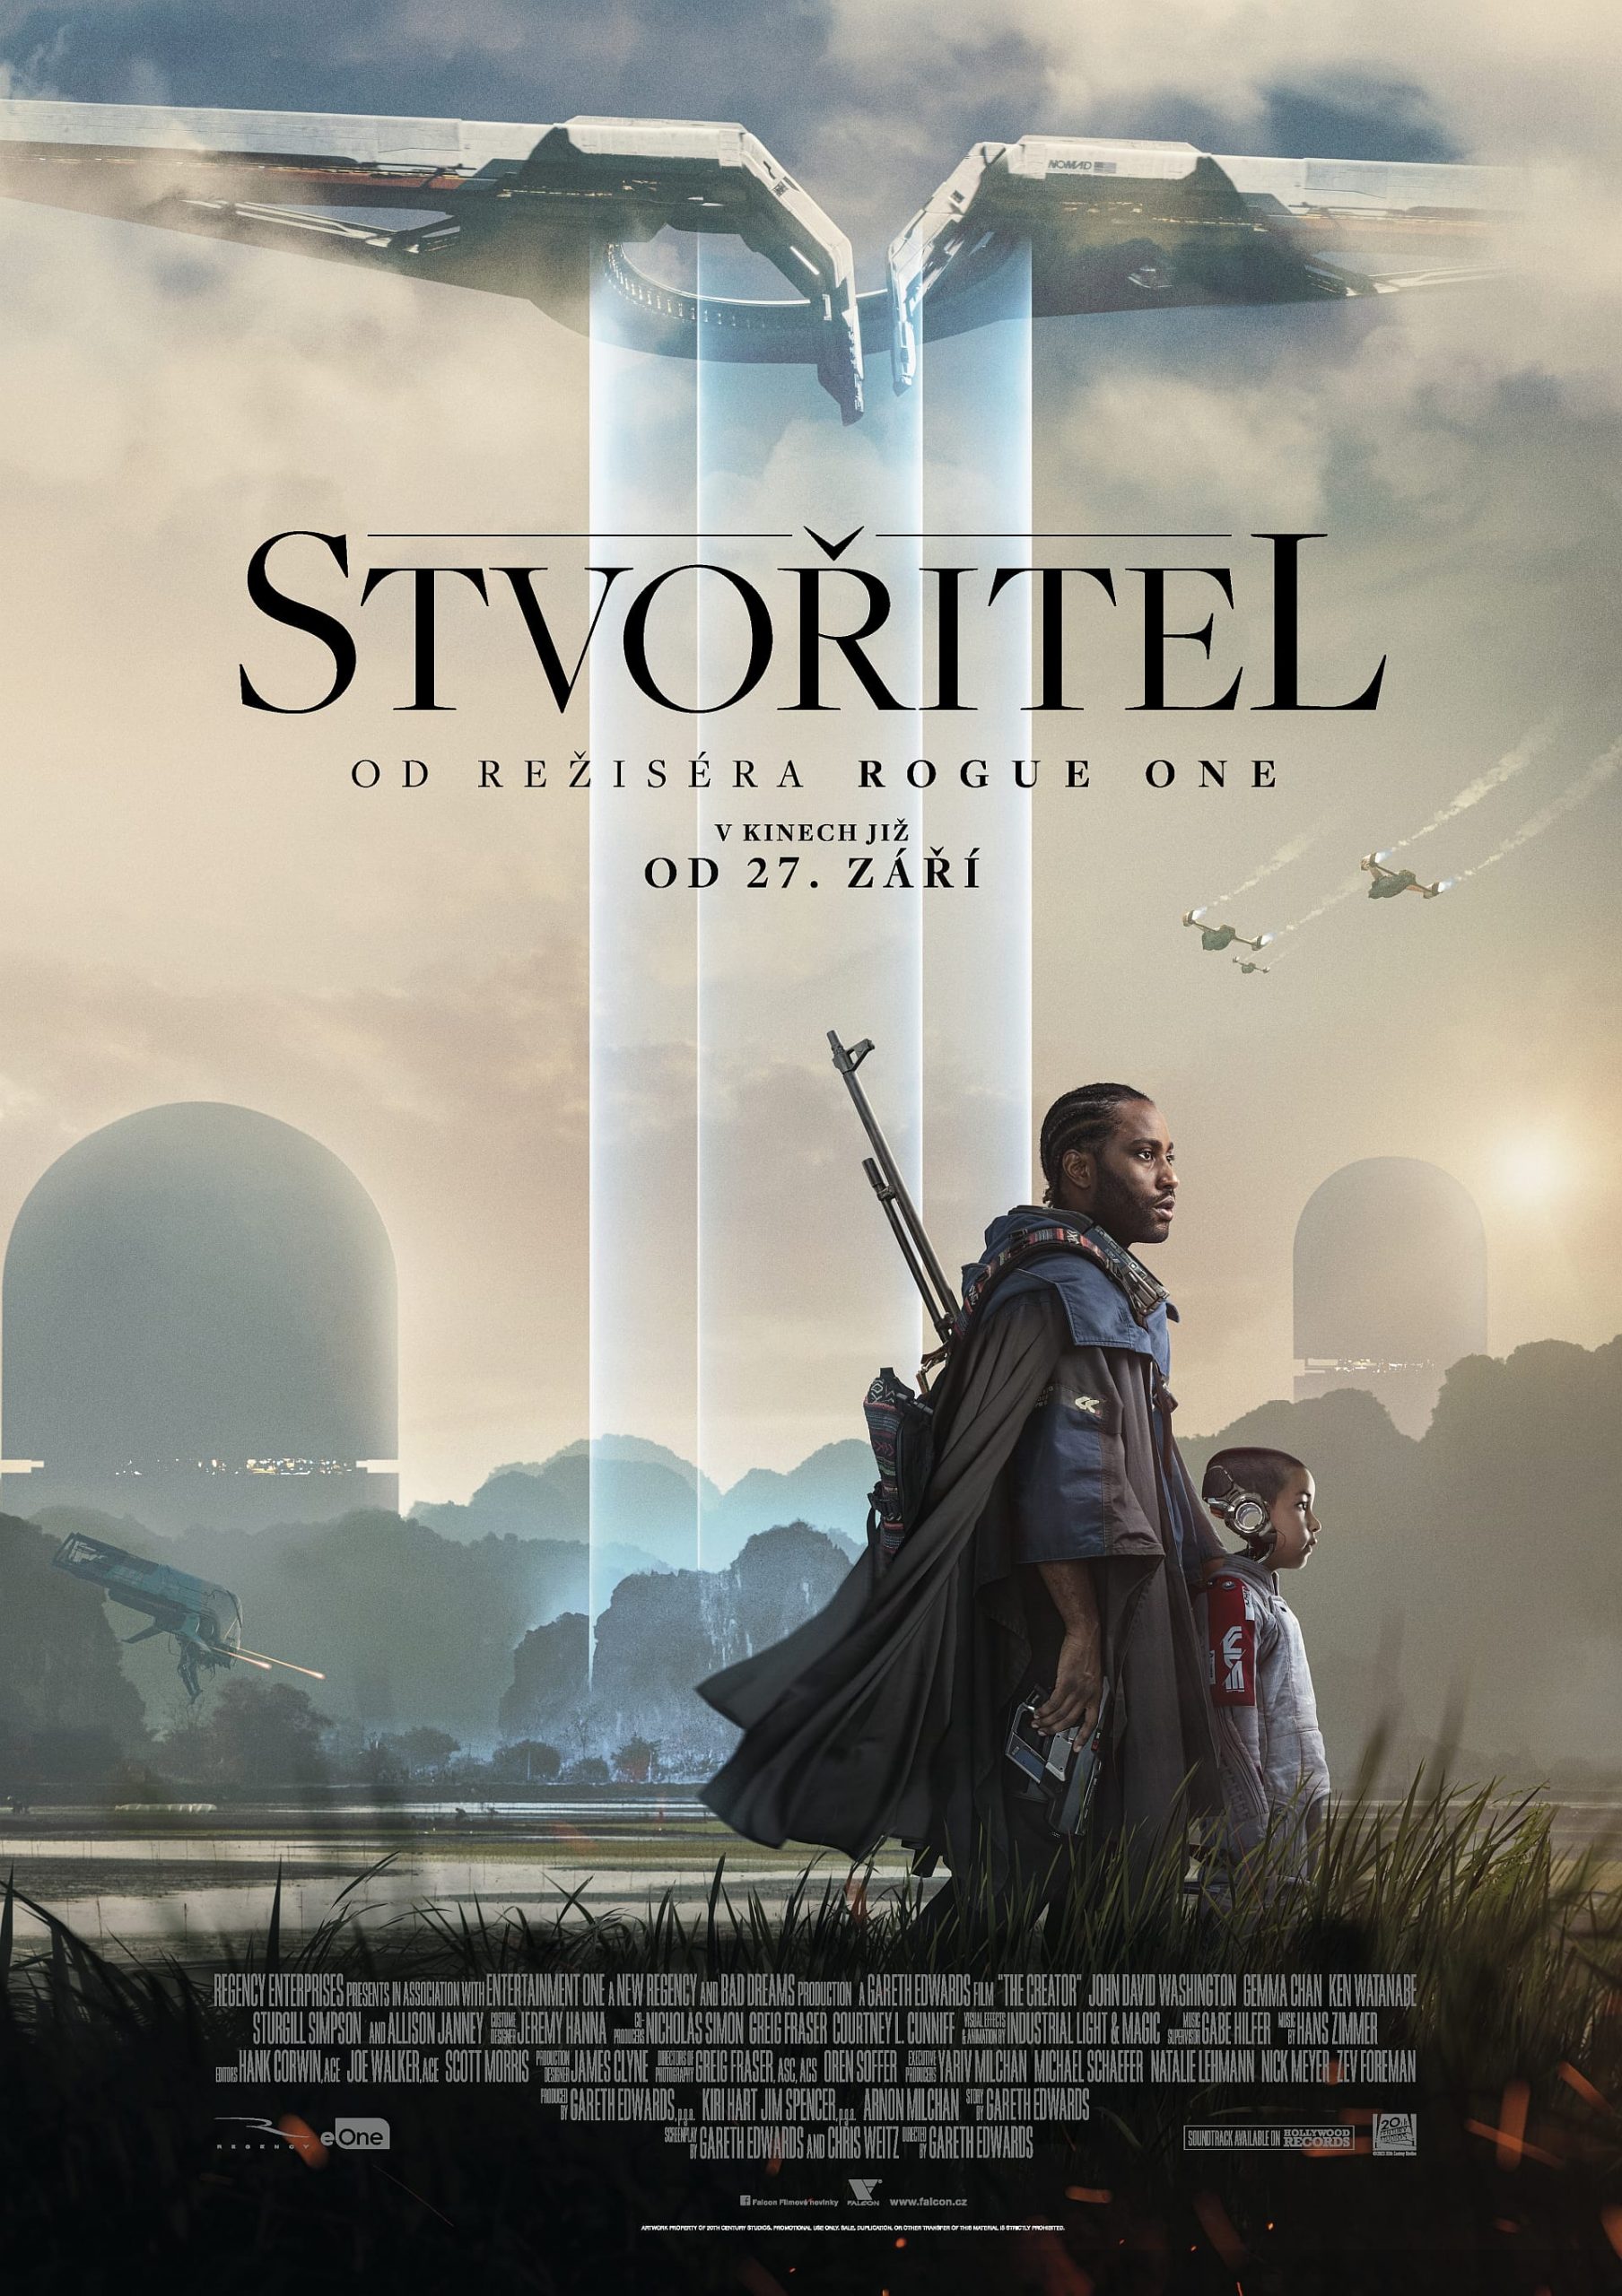 Poster for the movie "Stvořitel"